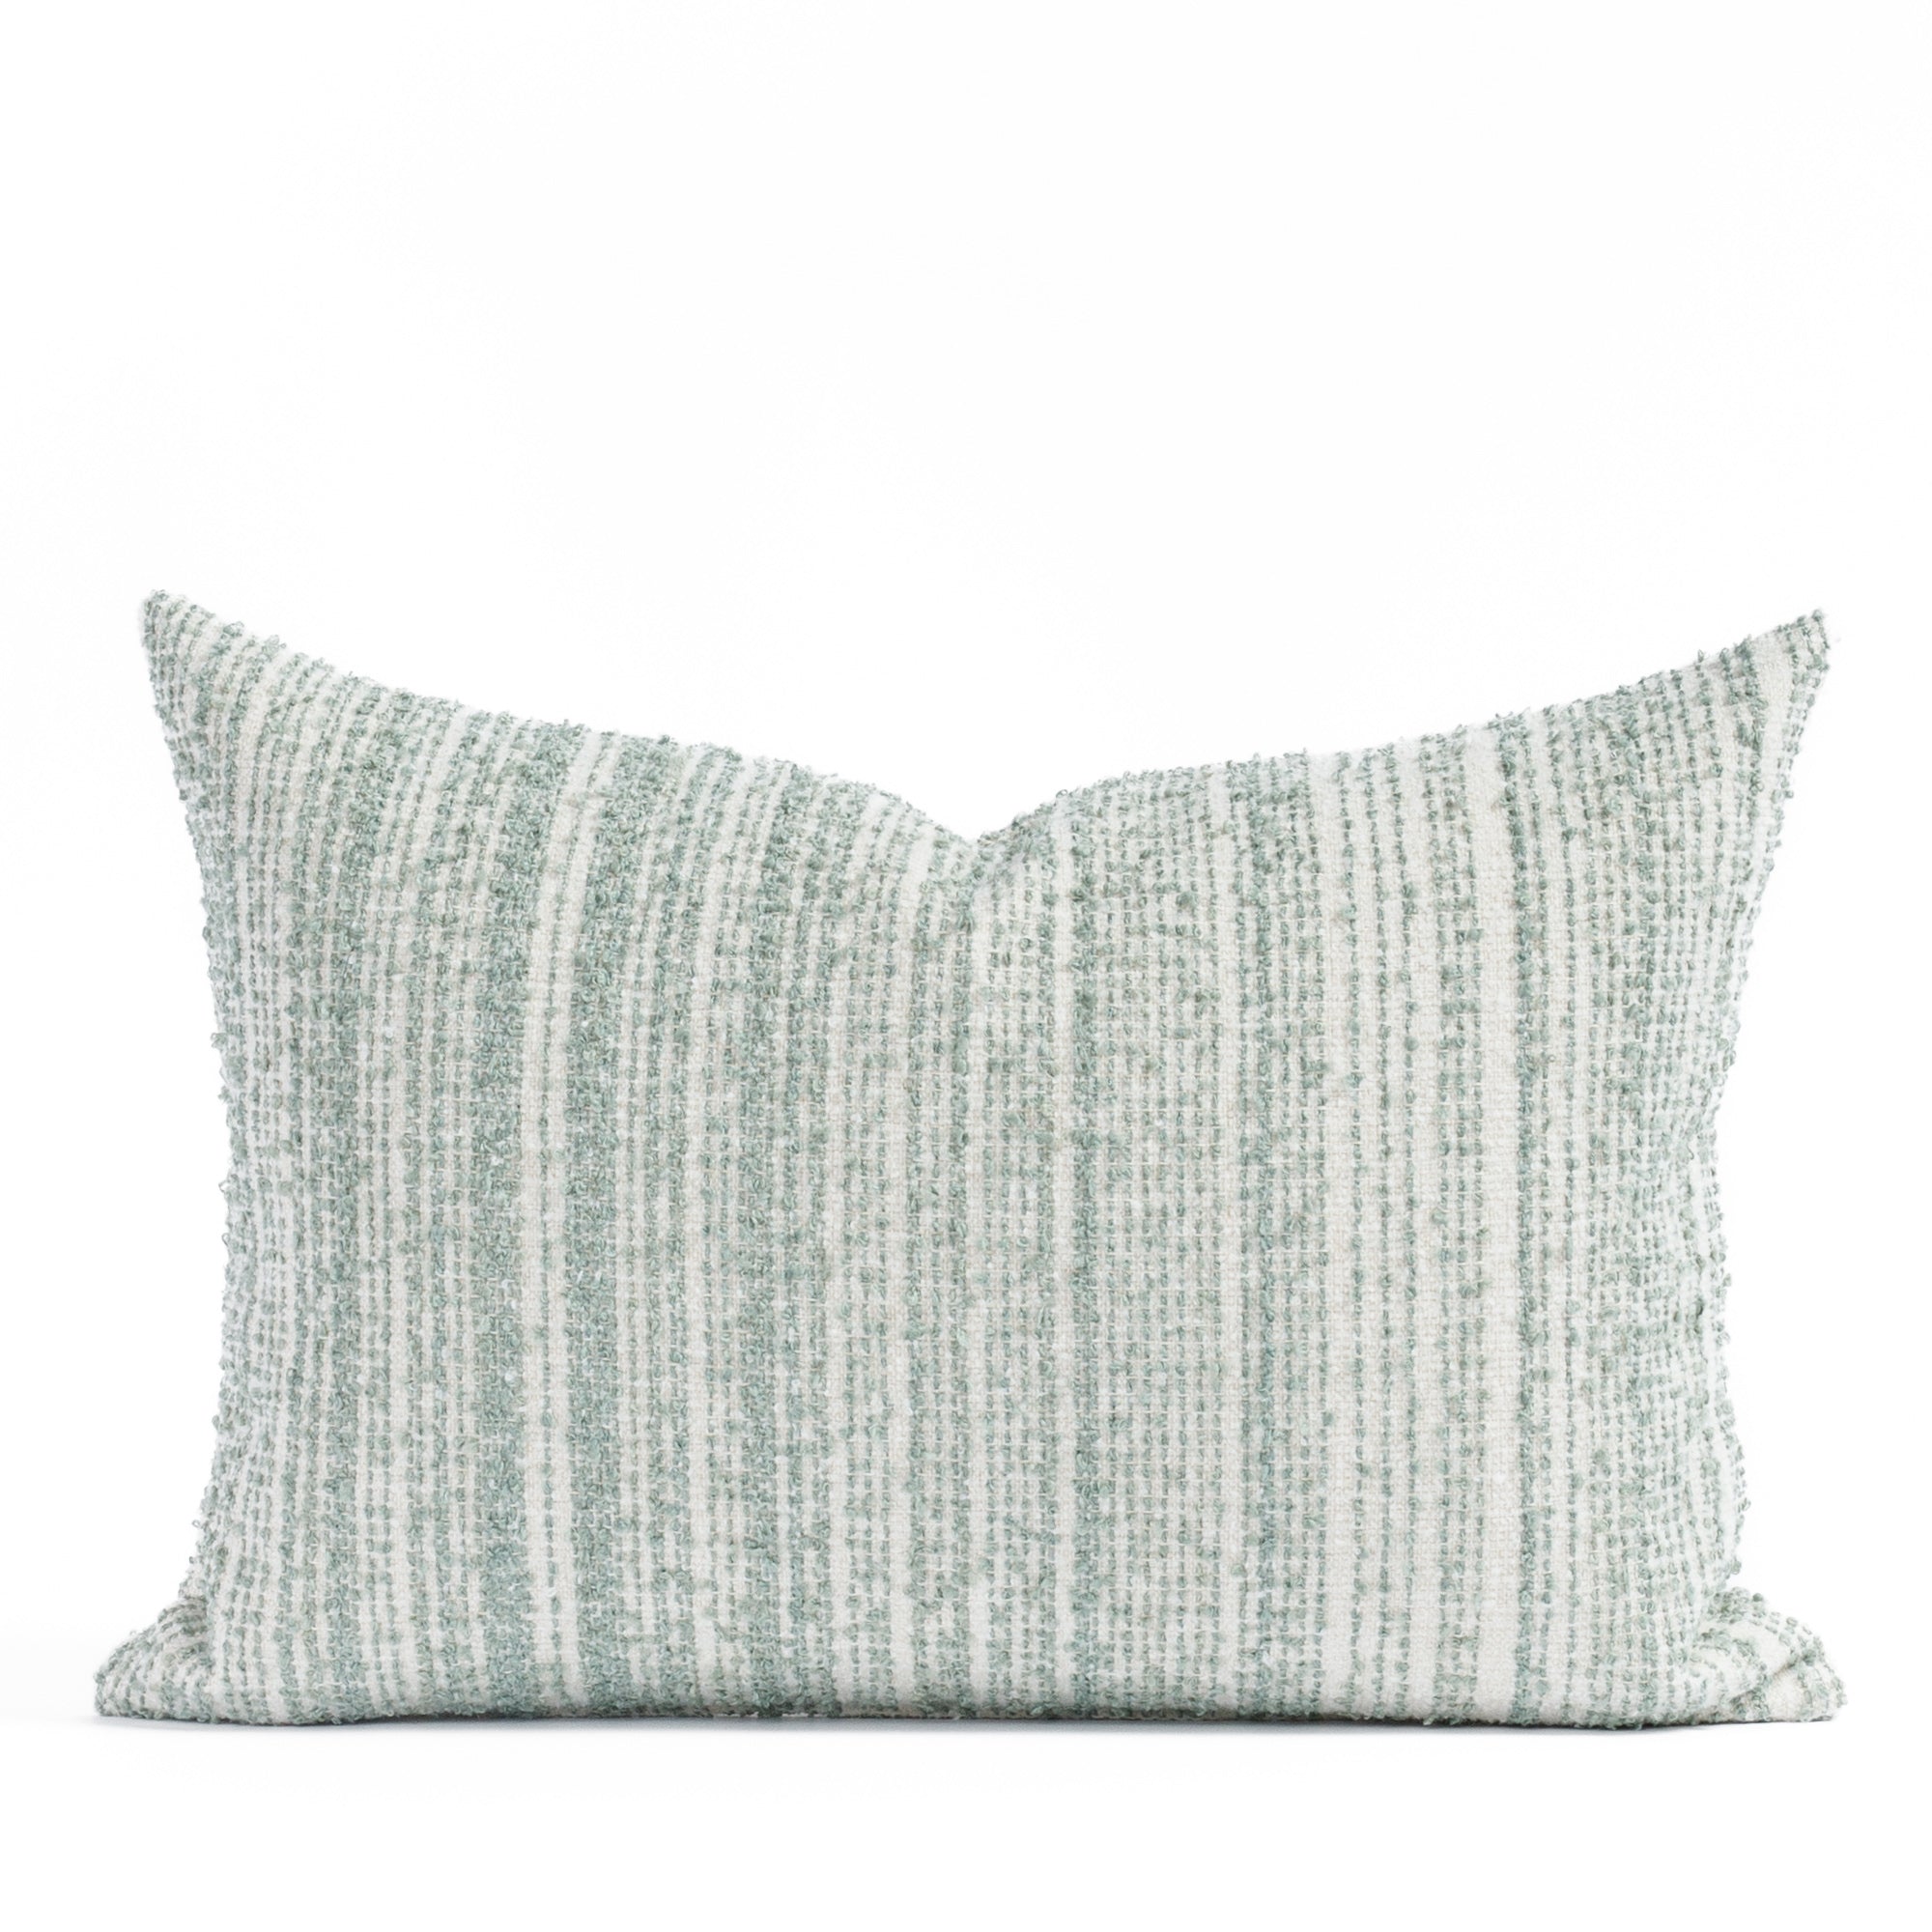 Kos Stripe 14x20 Jade Lumbar Pillow, a soft white and blue green boucle striped lumbar pillow from Tonic Living